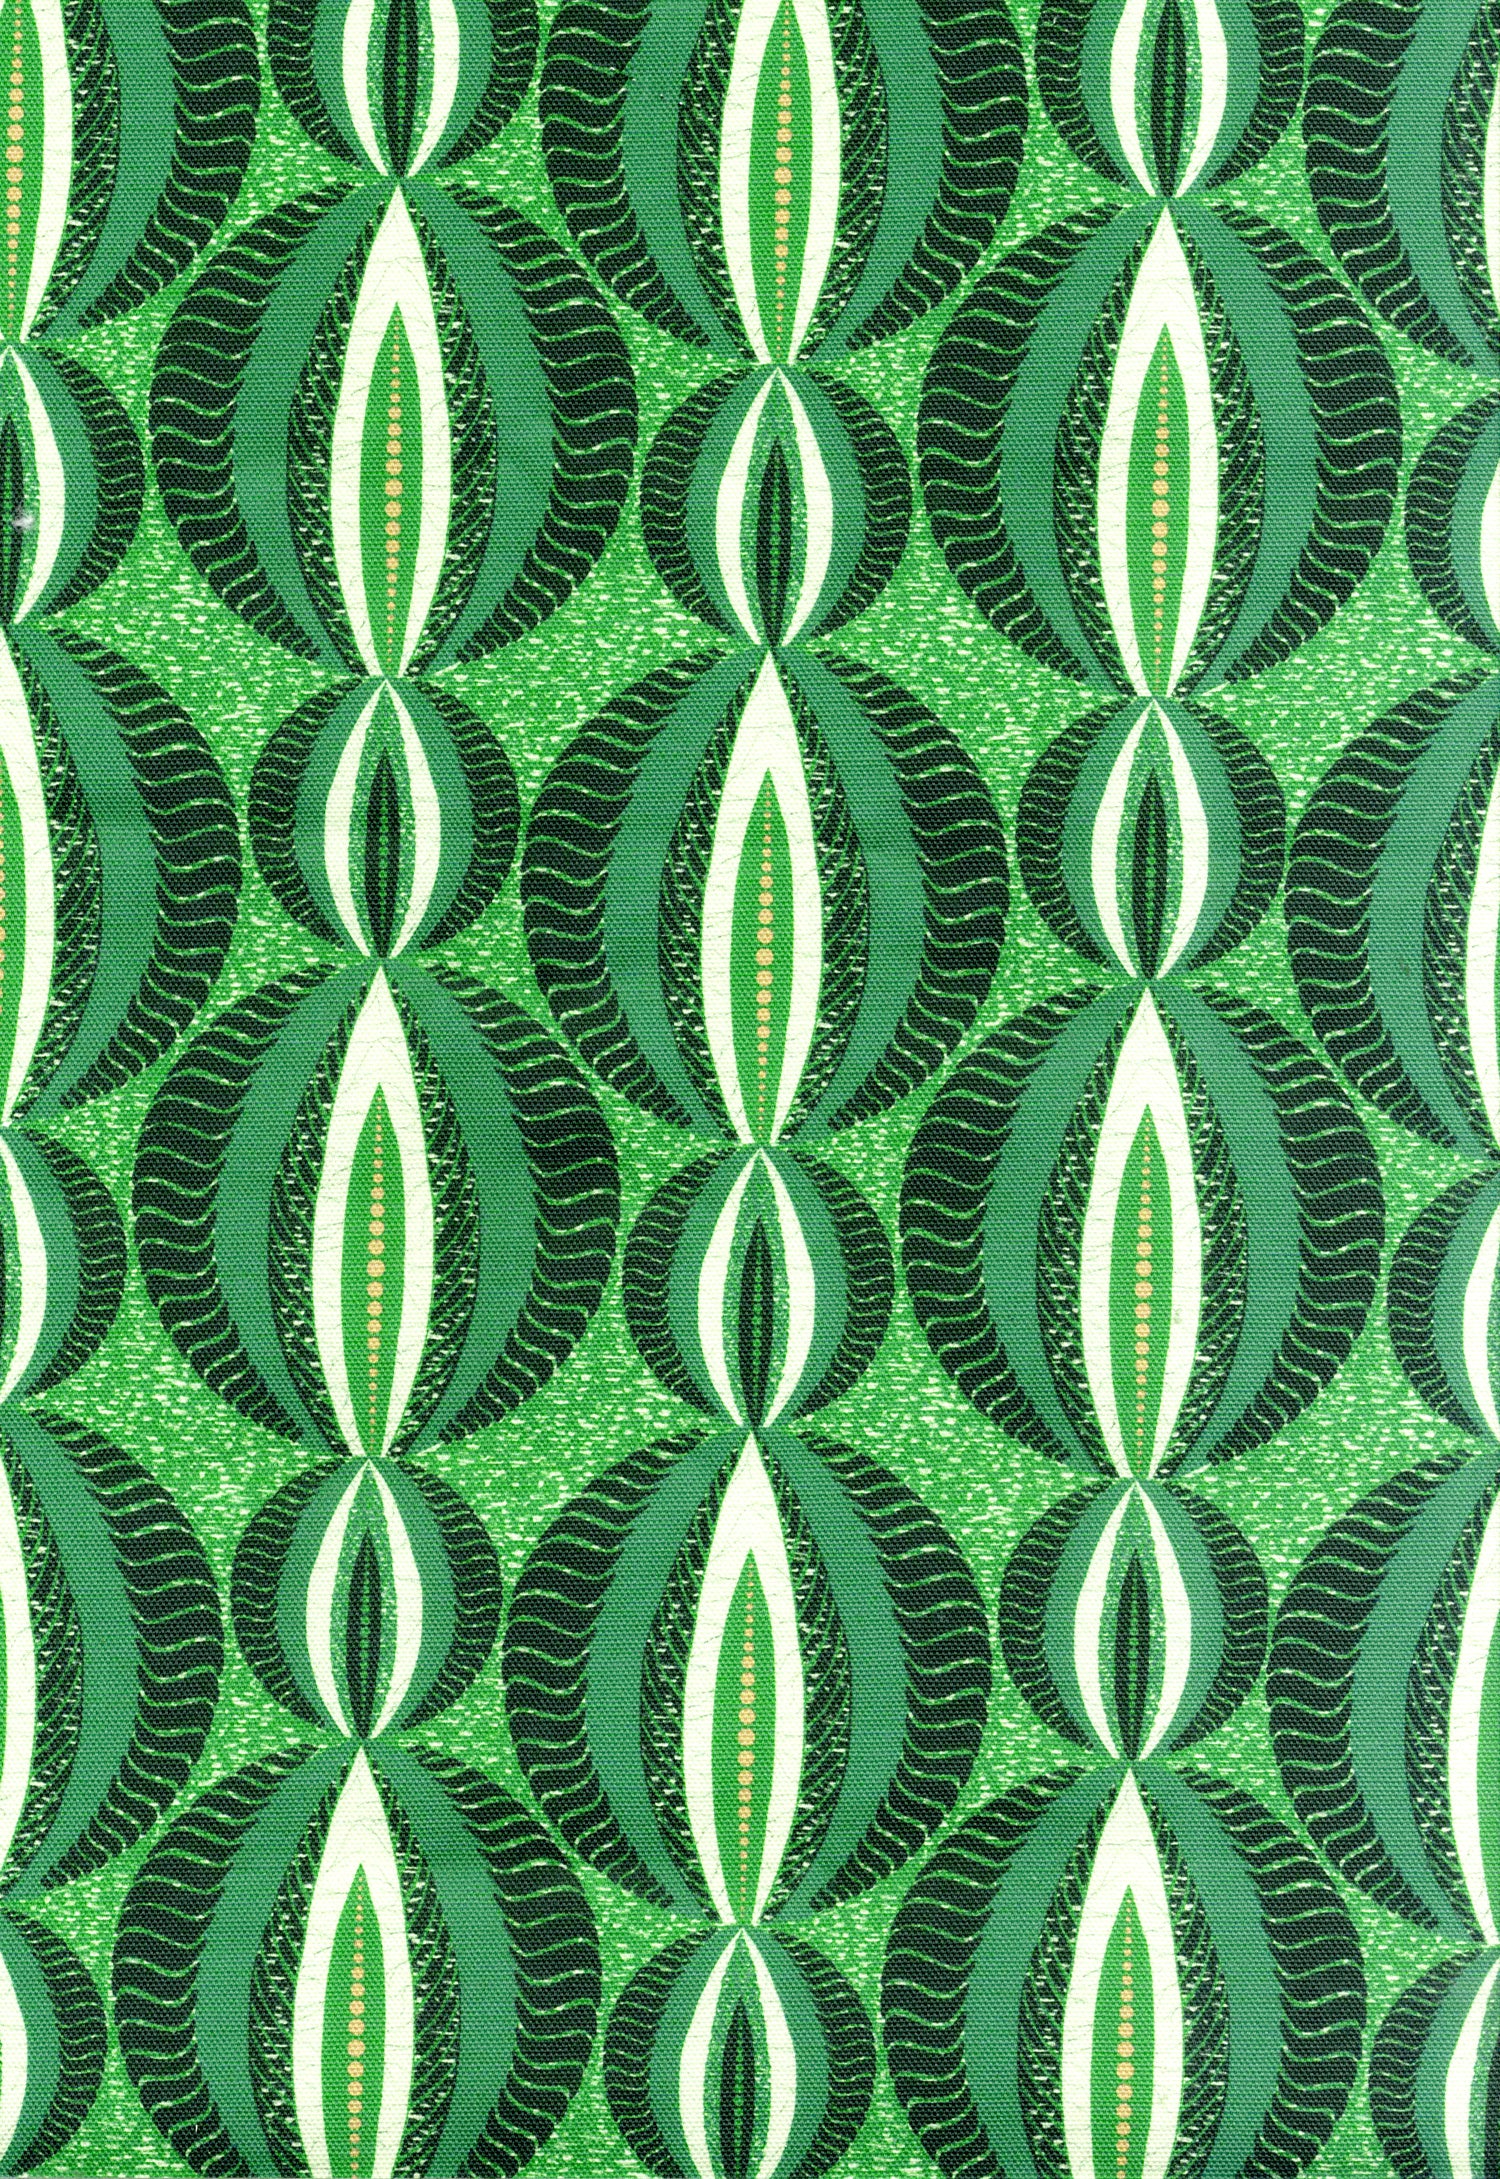 Detail of fabric in an interlocking circular stripe print in shades of green on a dark green field.